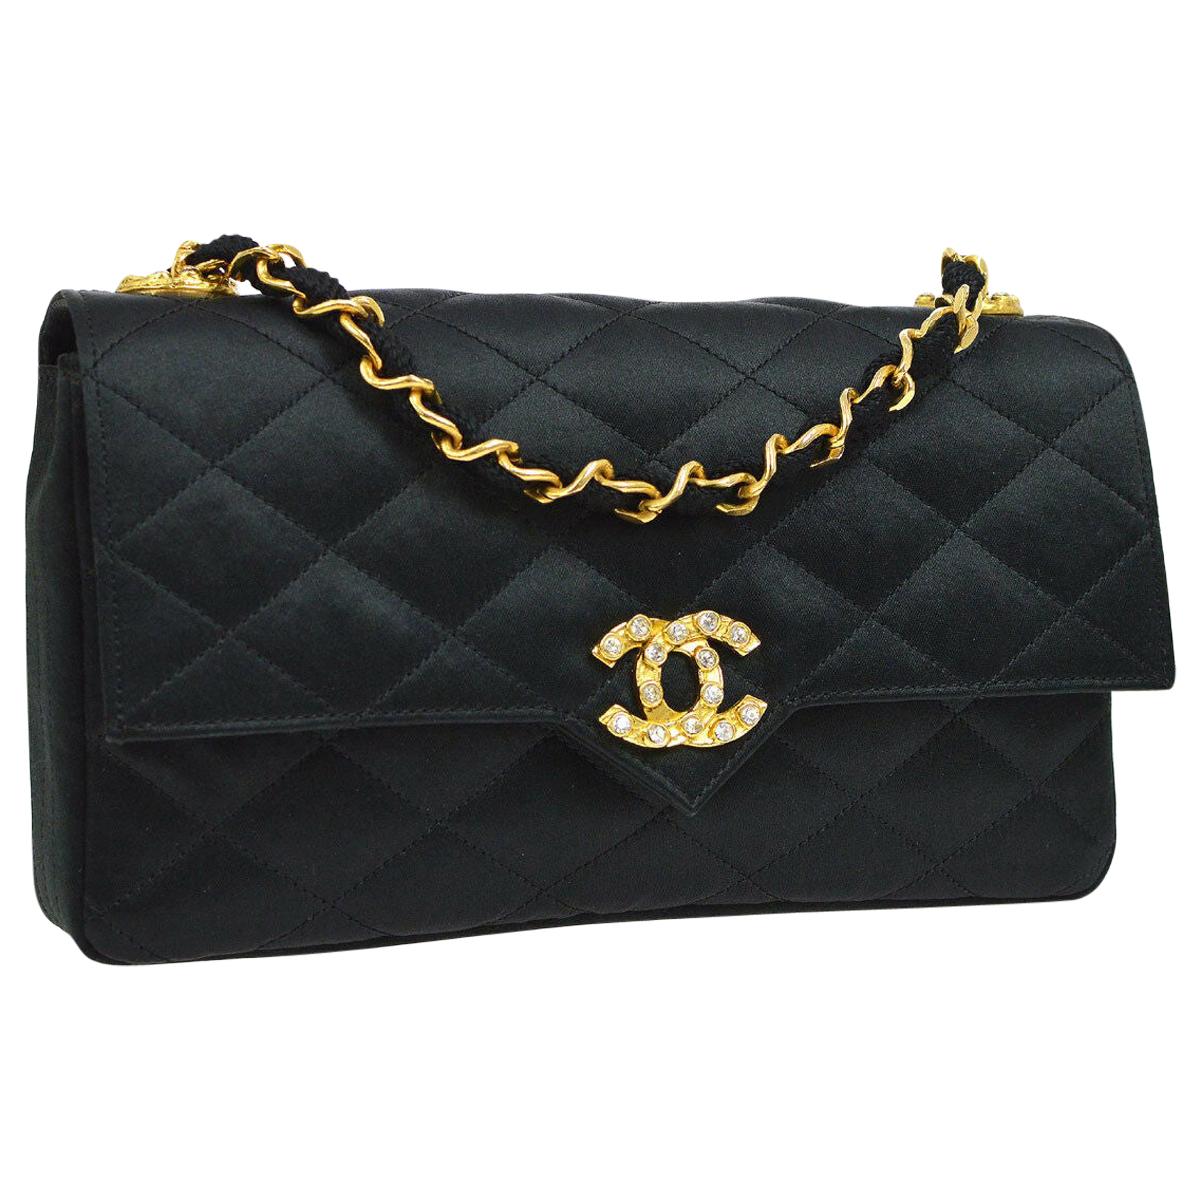 Chanel Black Satin Gold Rhinestone Evening Party Clutch Shoulder Flap Bag in Box